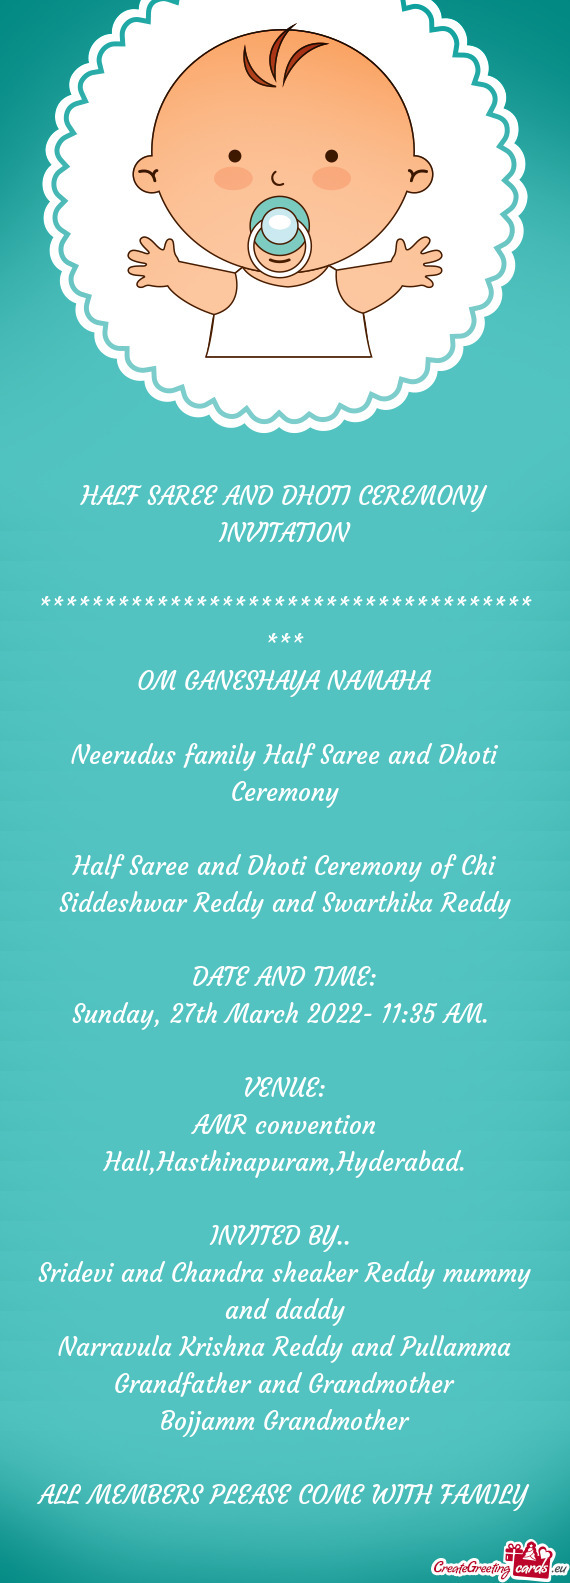 Half Saree and Dhoti Ceremony of Chi Siddeshwar Reddy and Swarthika Reddy